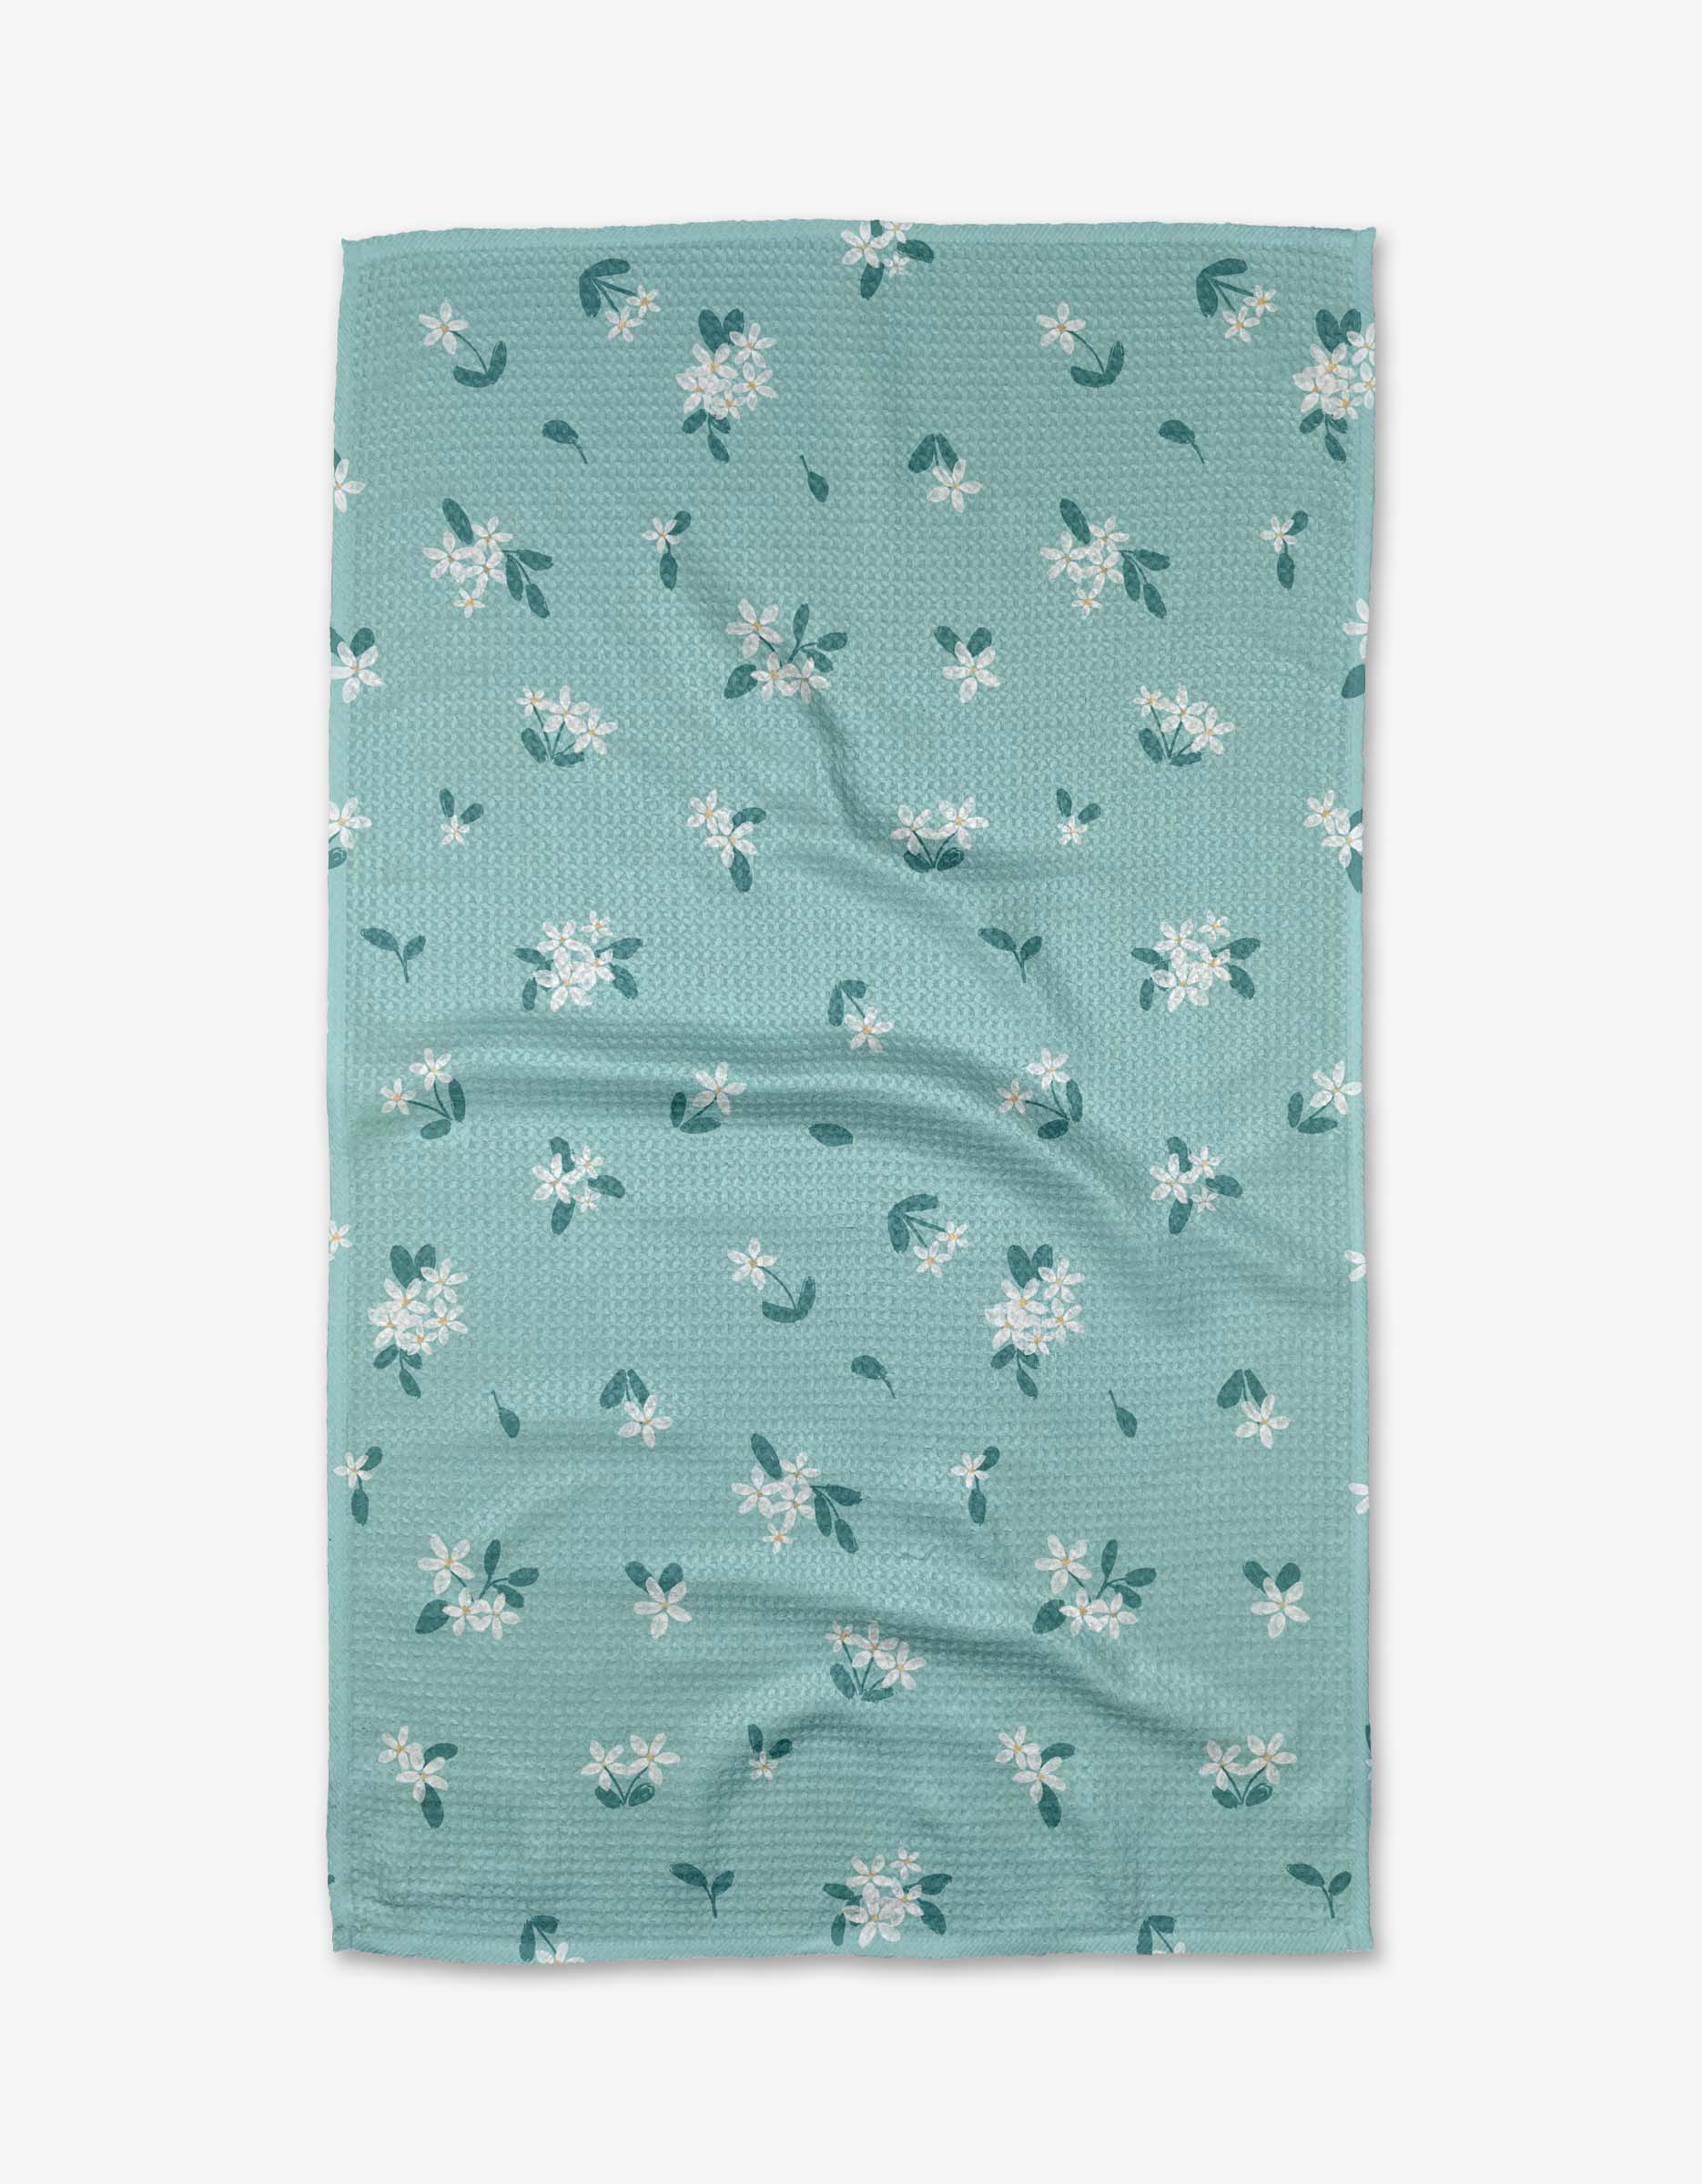 Blossom Breeze in Robins Egg Tea Towel - The Preppy Bunny